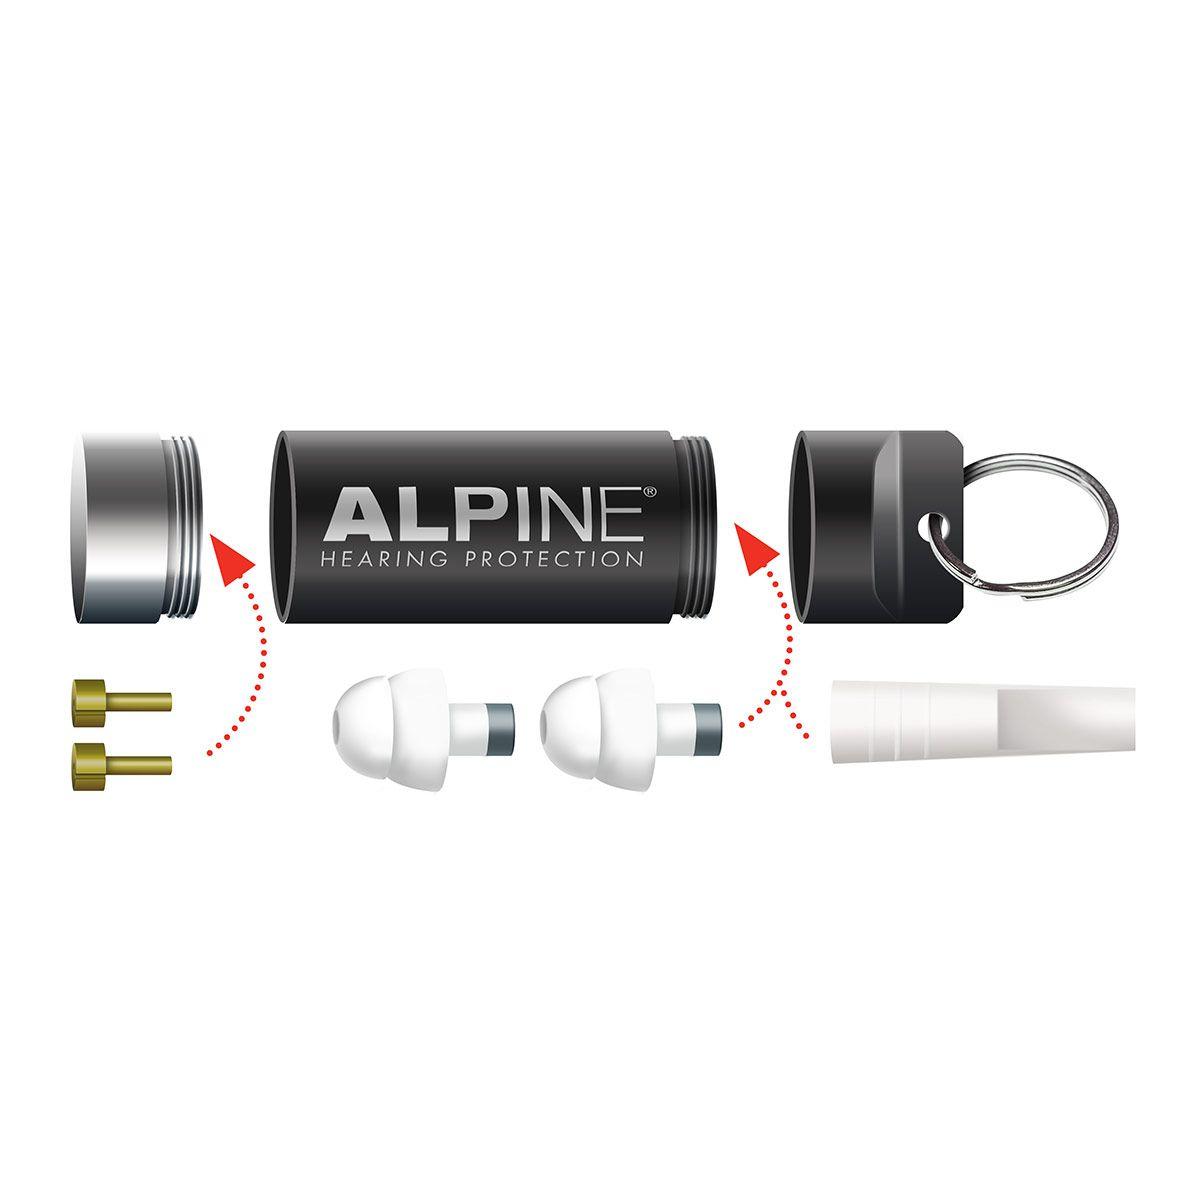 Alpine Logo - Travelbox deluxe tube for storing your earplugs